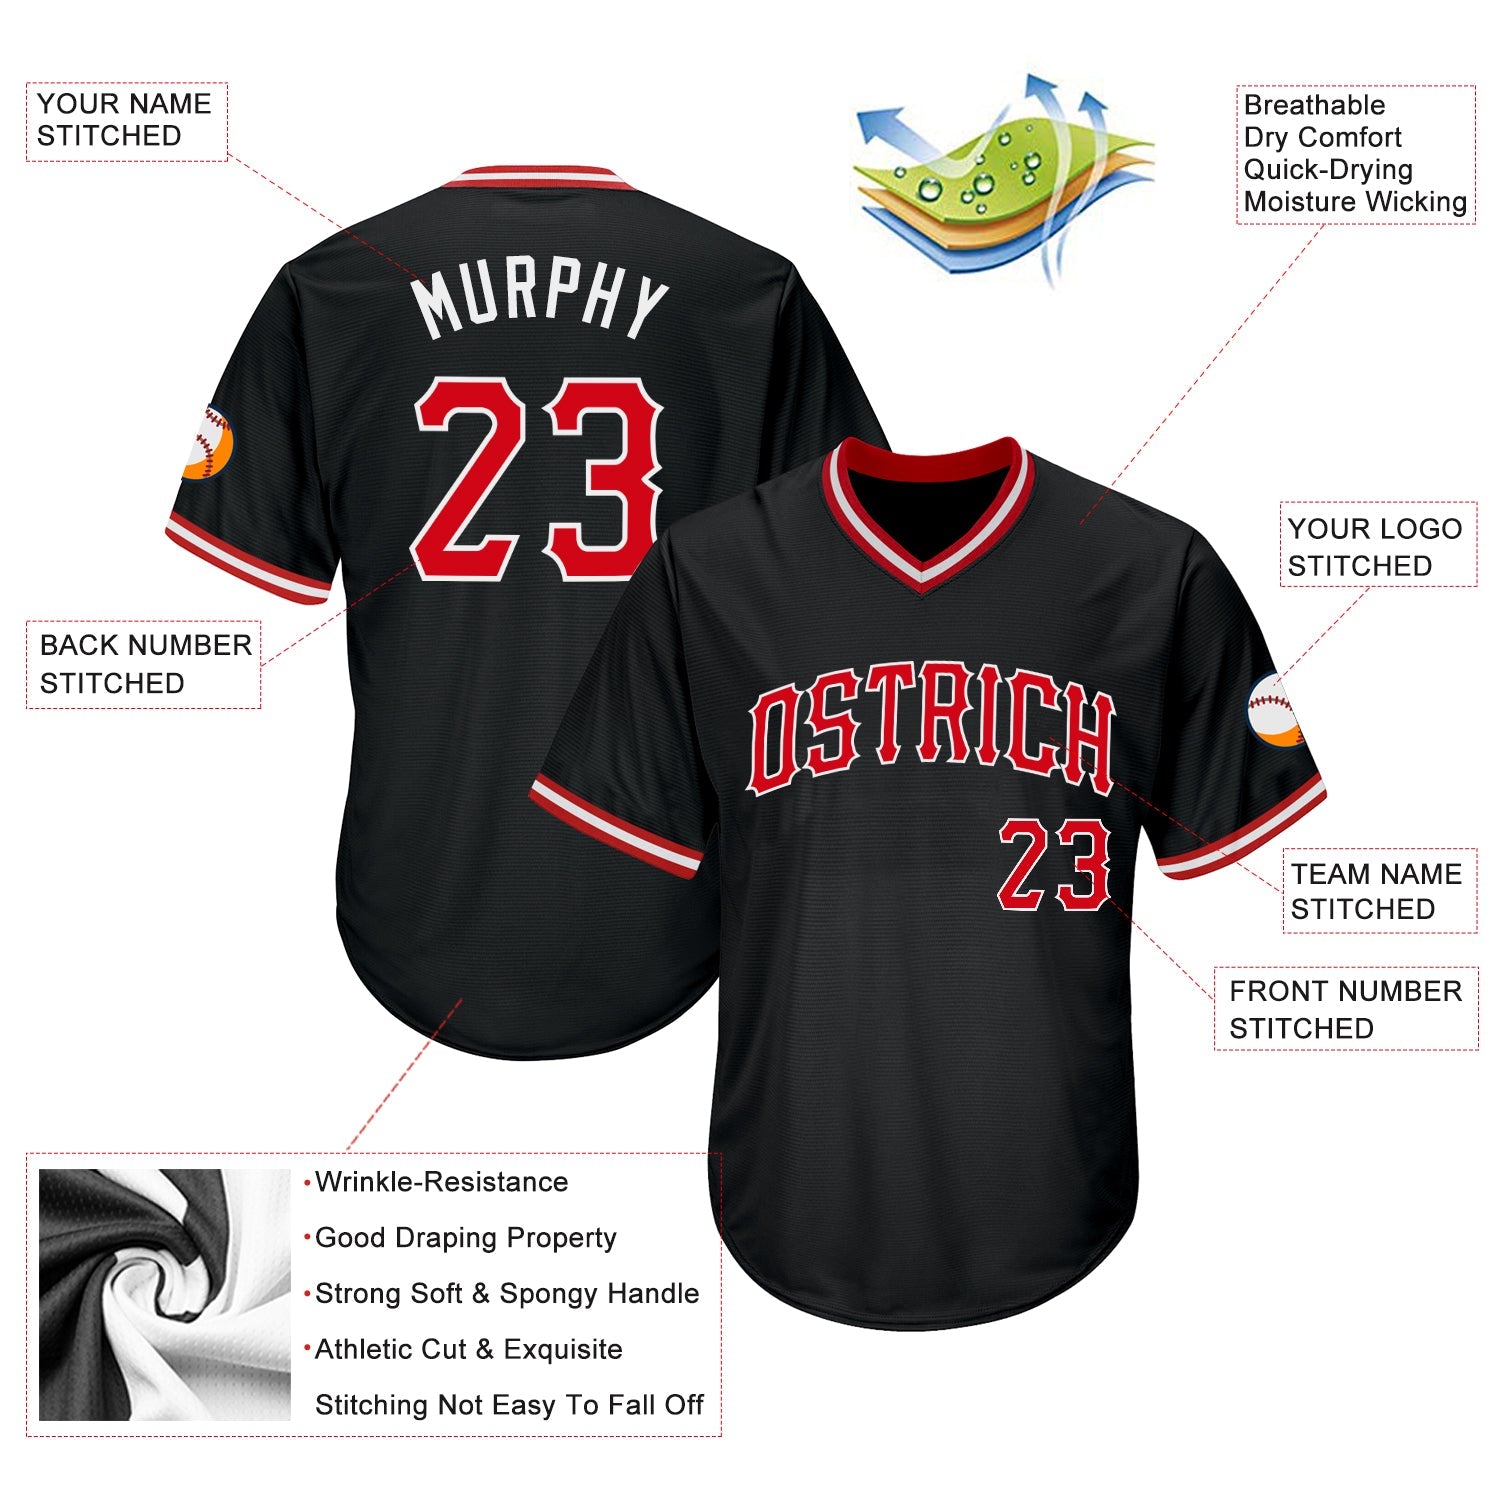 Custom Black Red-White Authentic Throwback Rib-Knit Baseball Jersey Shirt